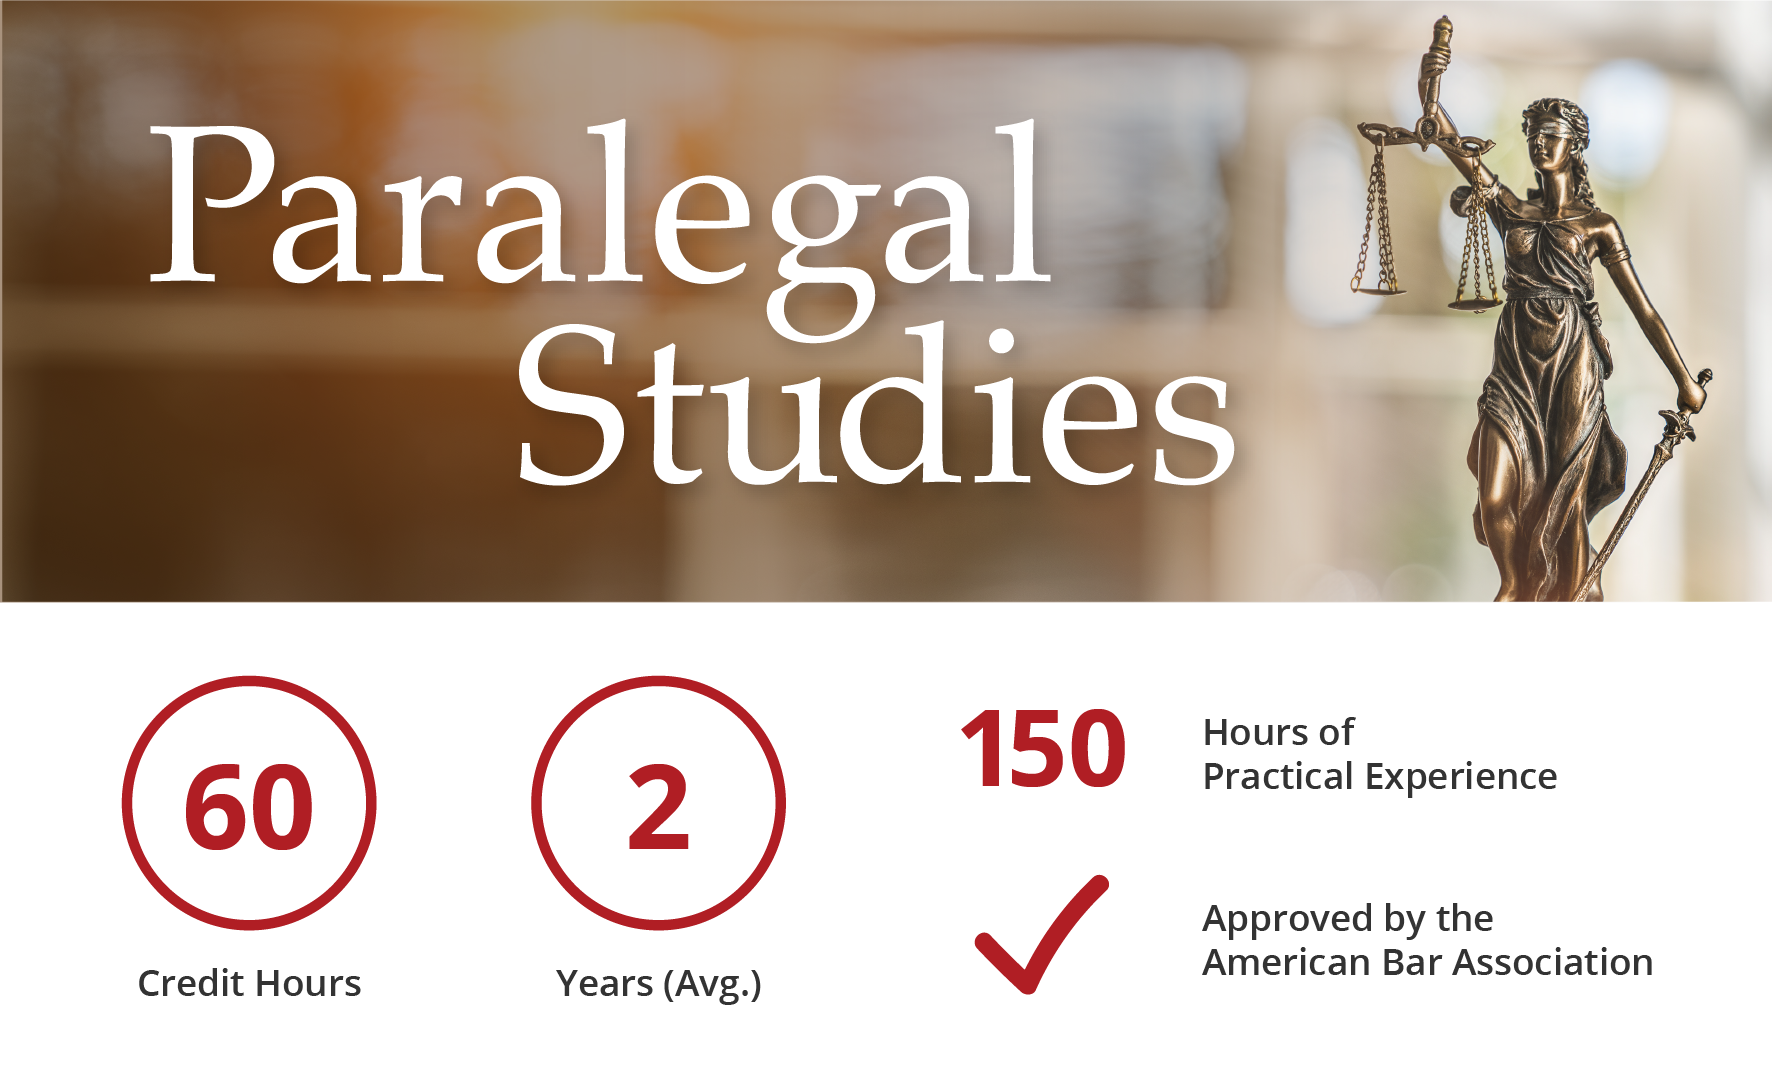 Paralegal Studies Summary